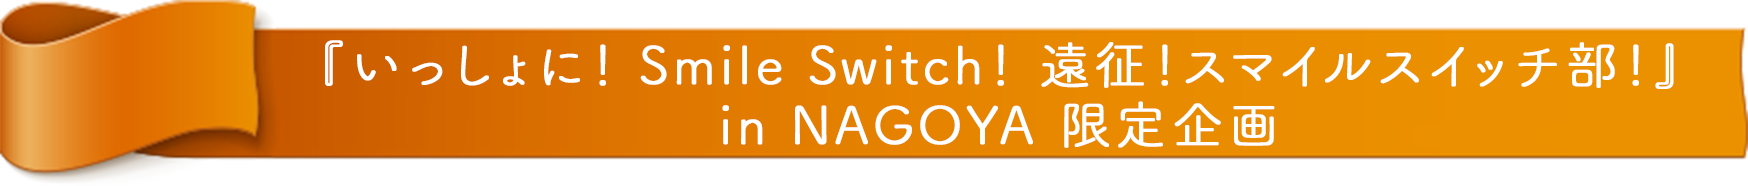 『FUJIYA いっしょに！ Smile Switch！ 遠征！スマイルスイッチ部！ in NAGOYA』 限定企画